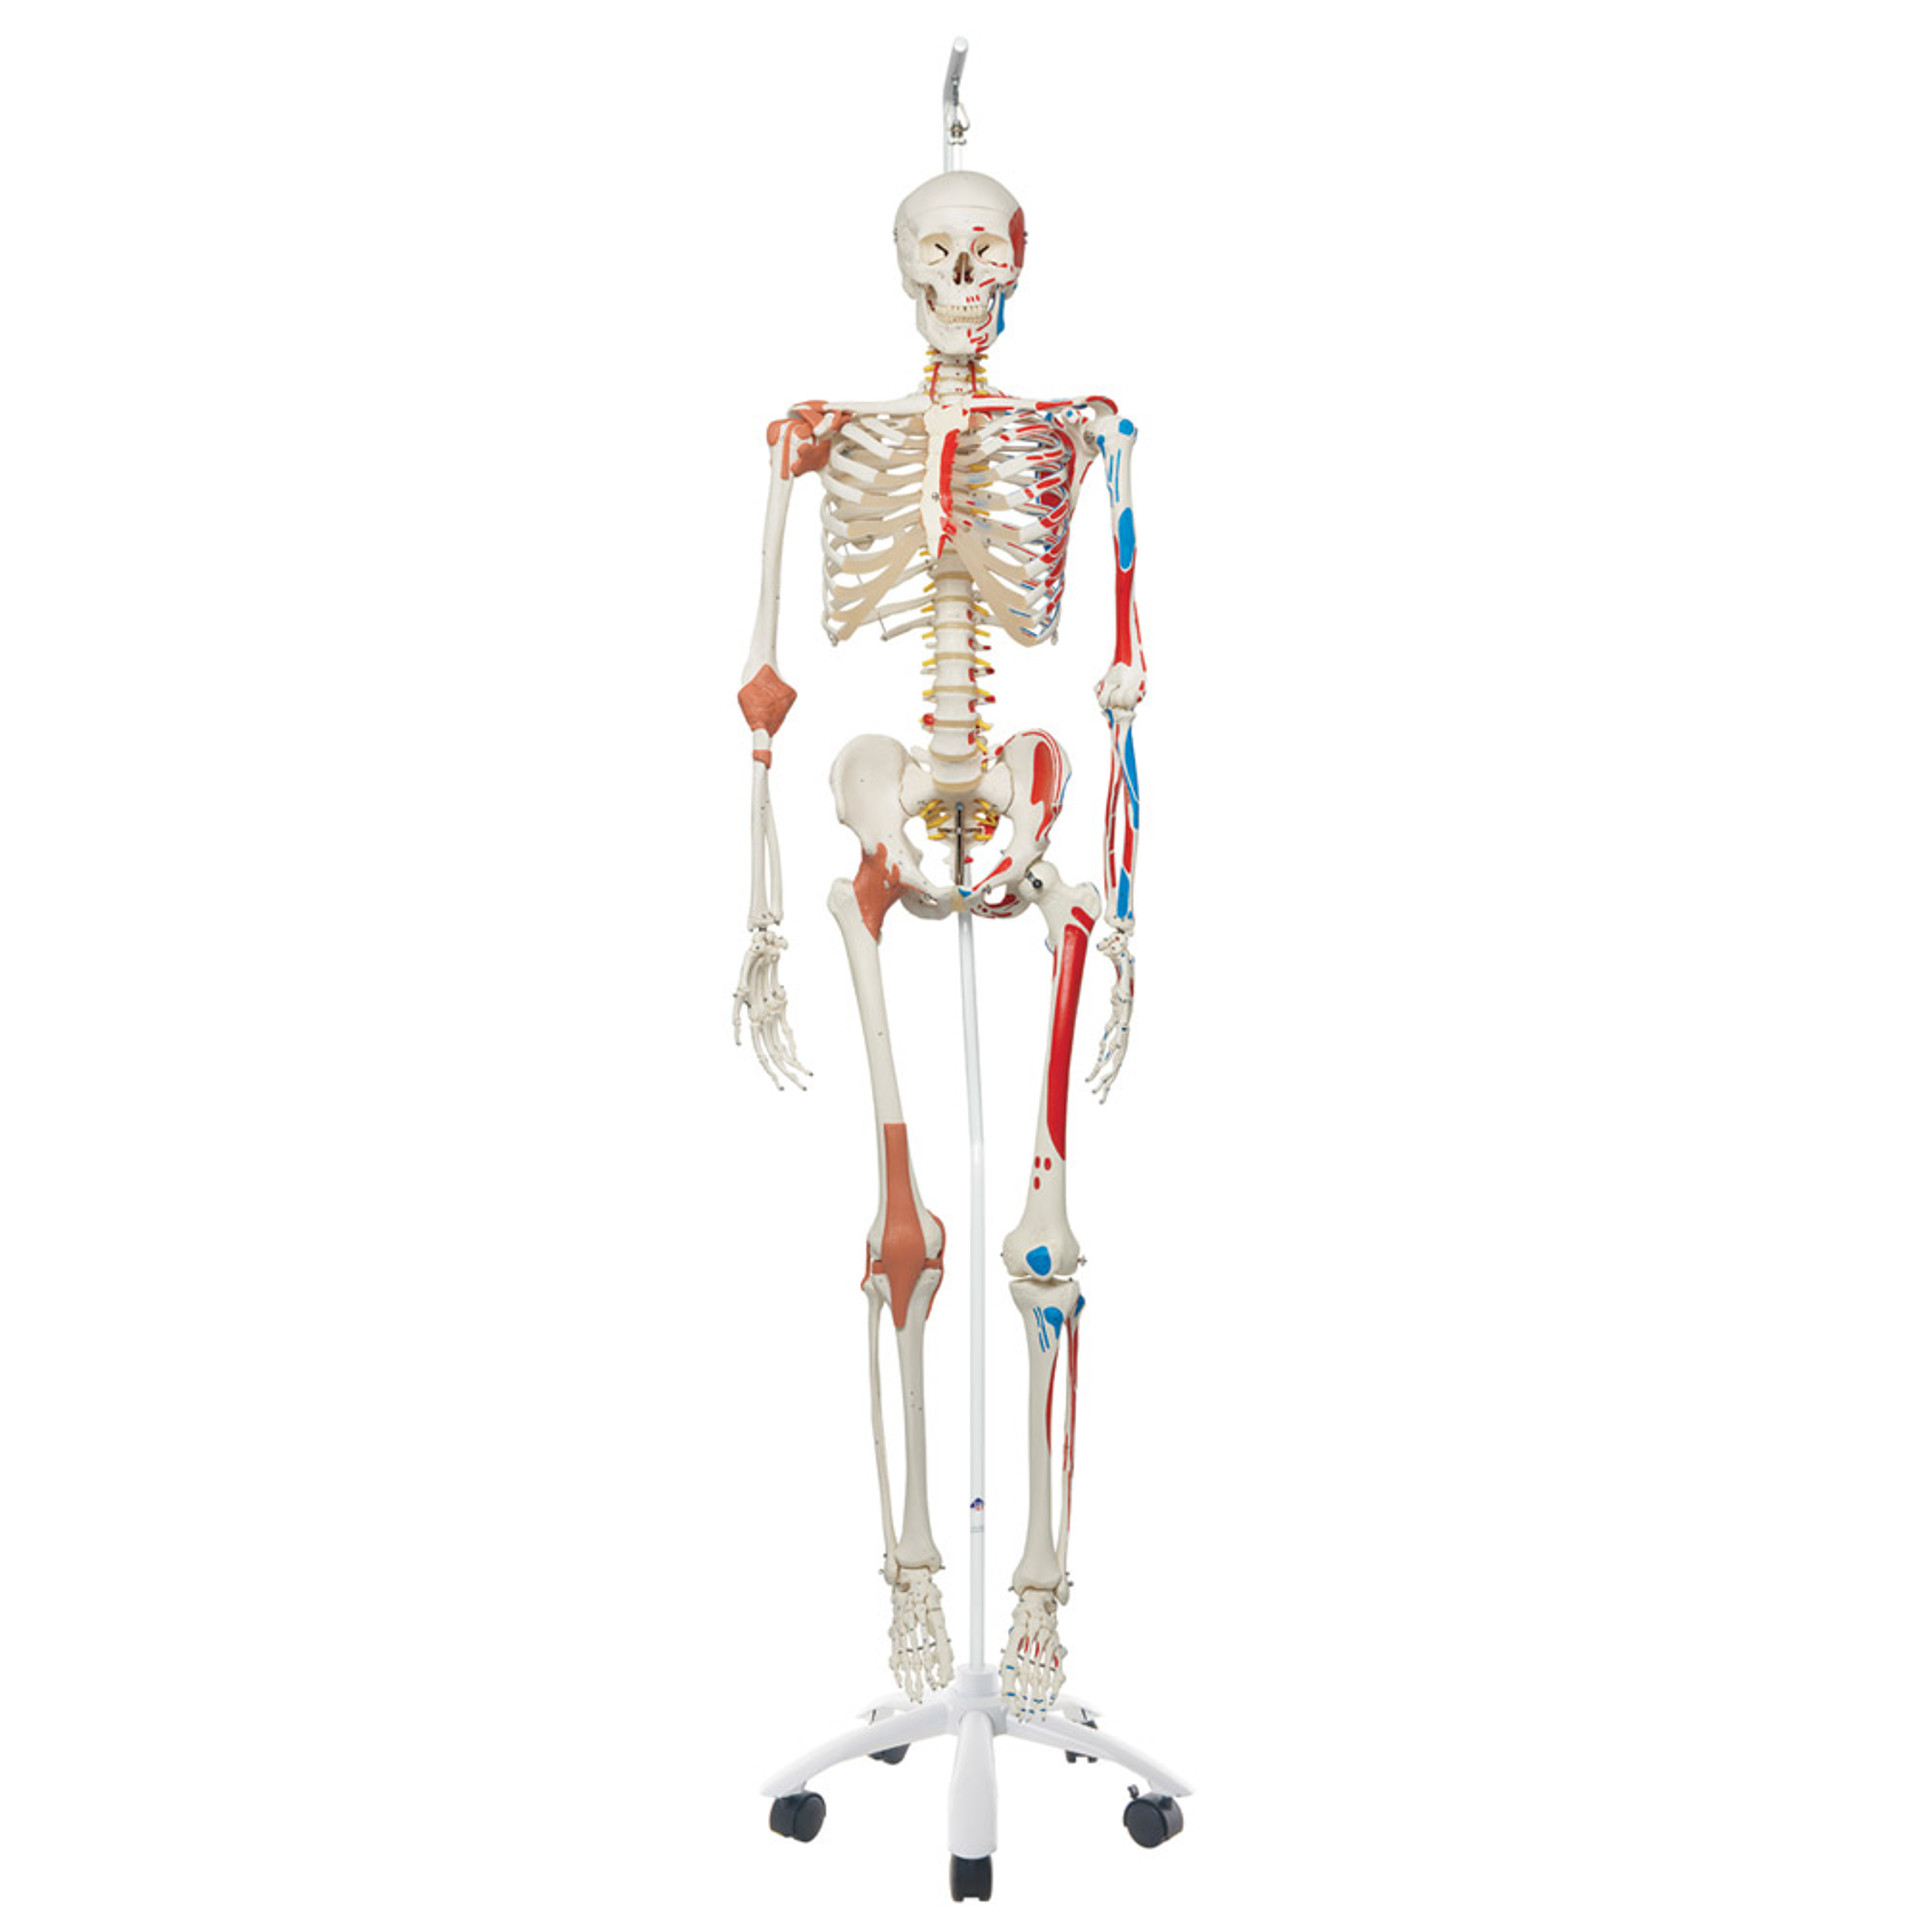 Internal Organs of the Human Body Anatomical Chart